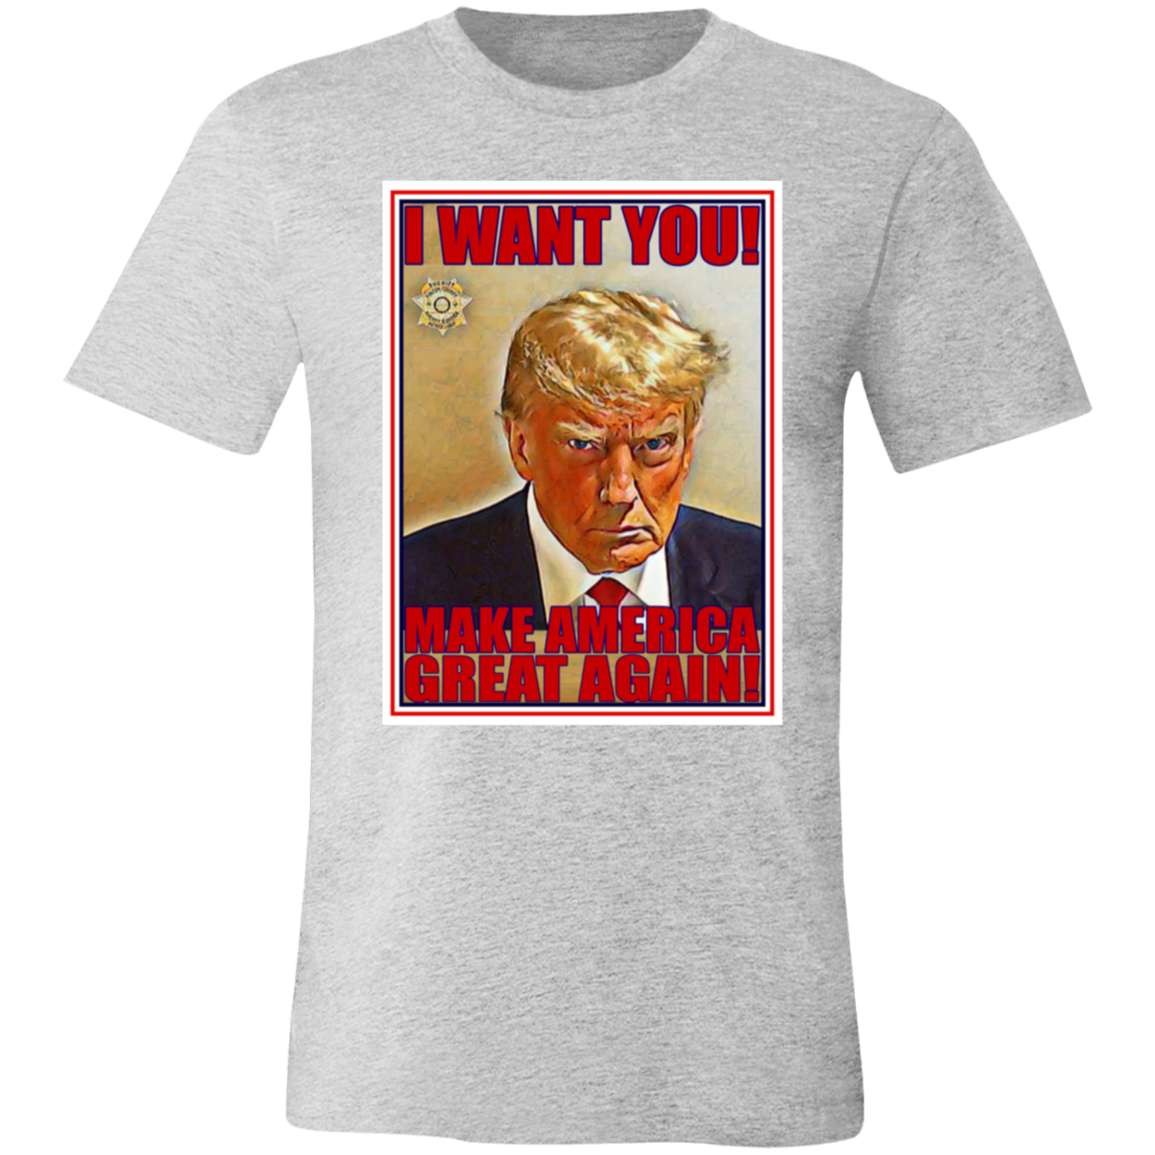 Trump I Want You Jersey Short-Sleeve T-Shirt